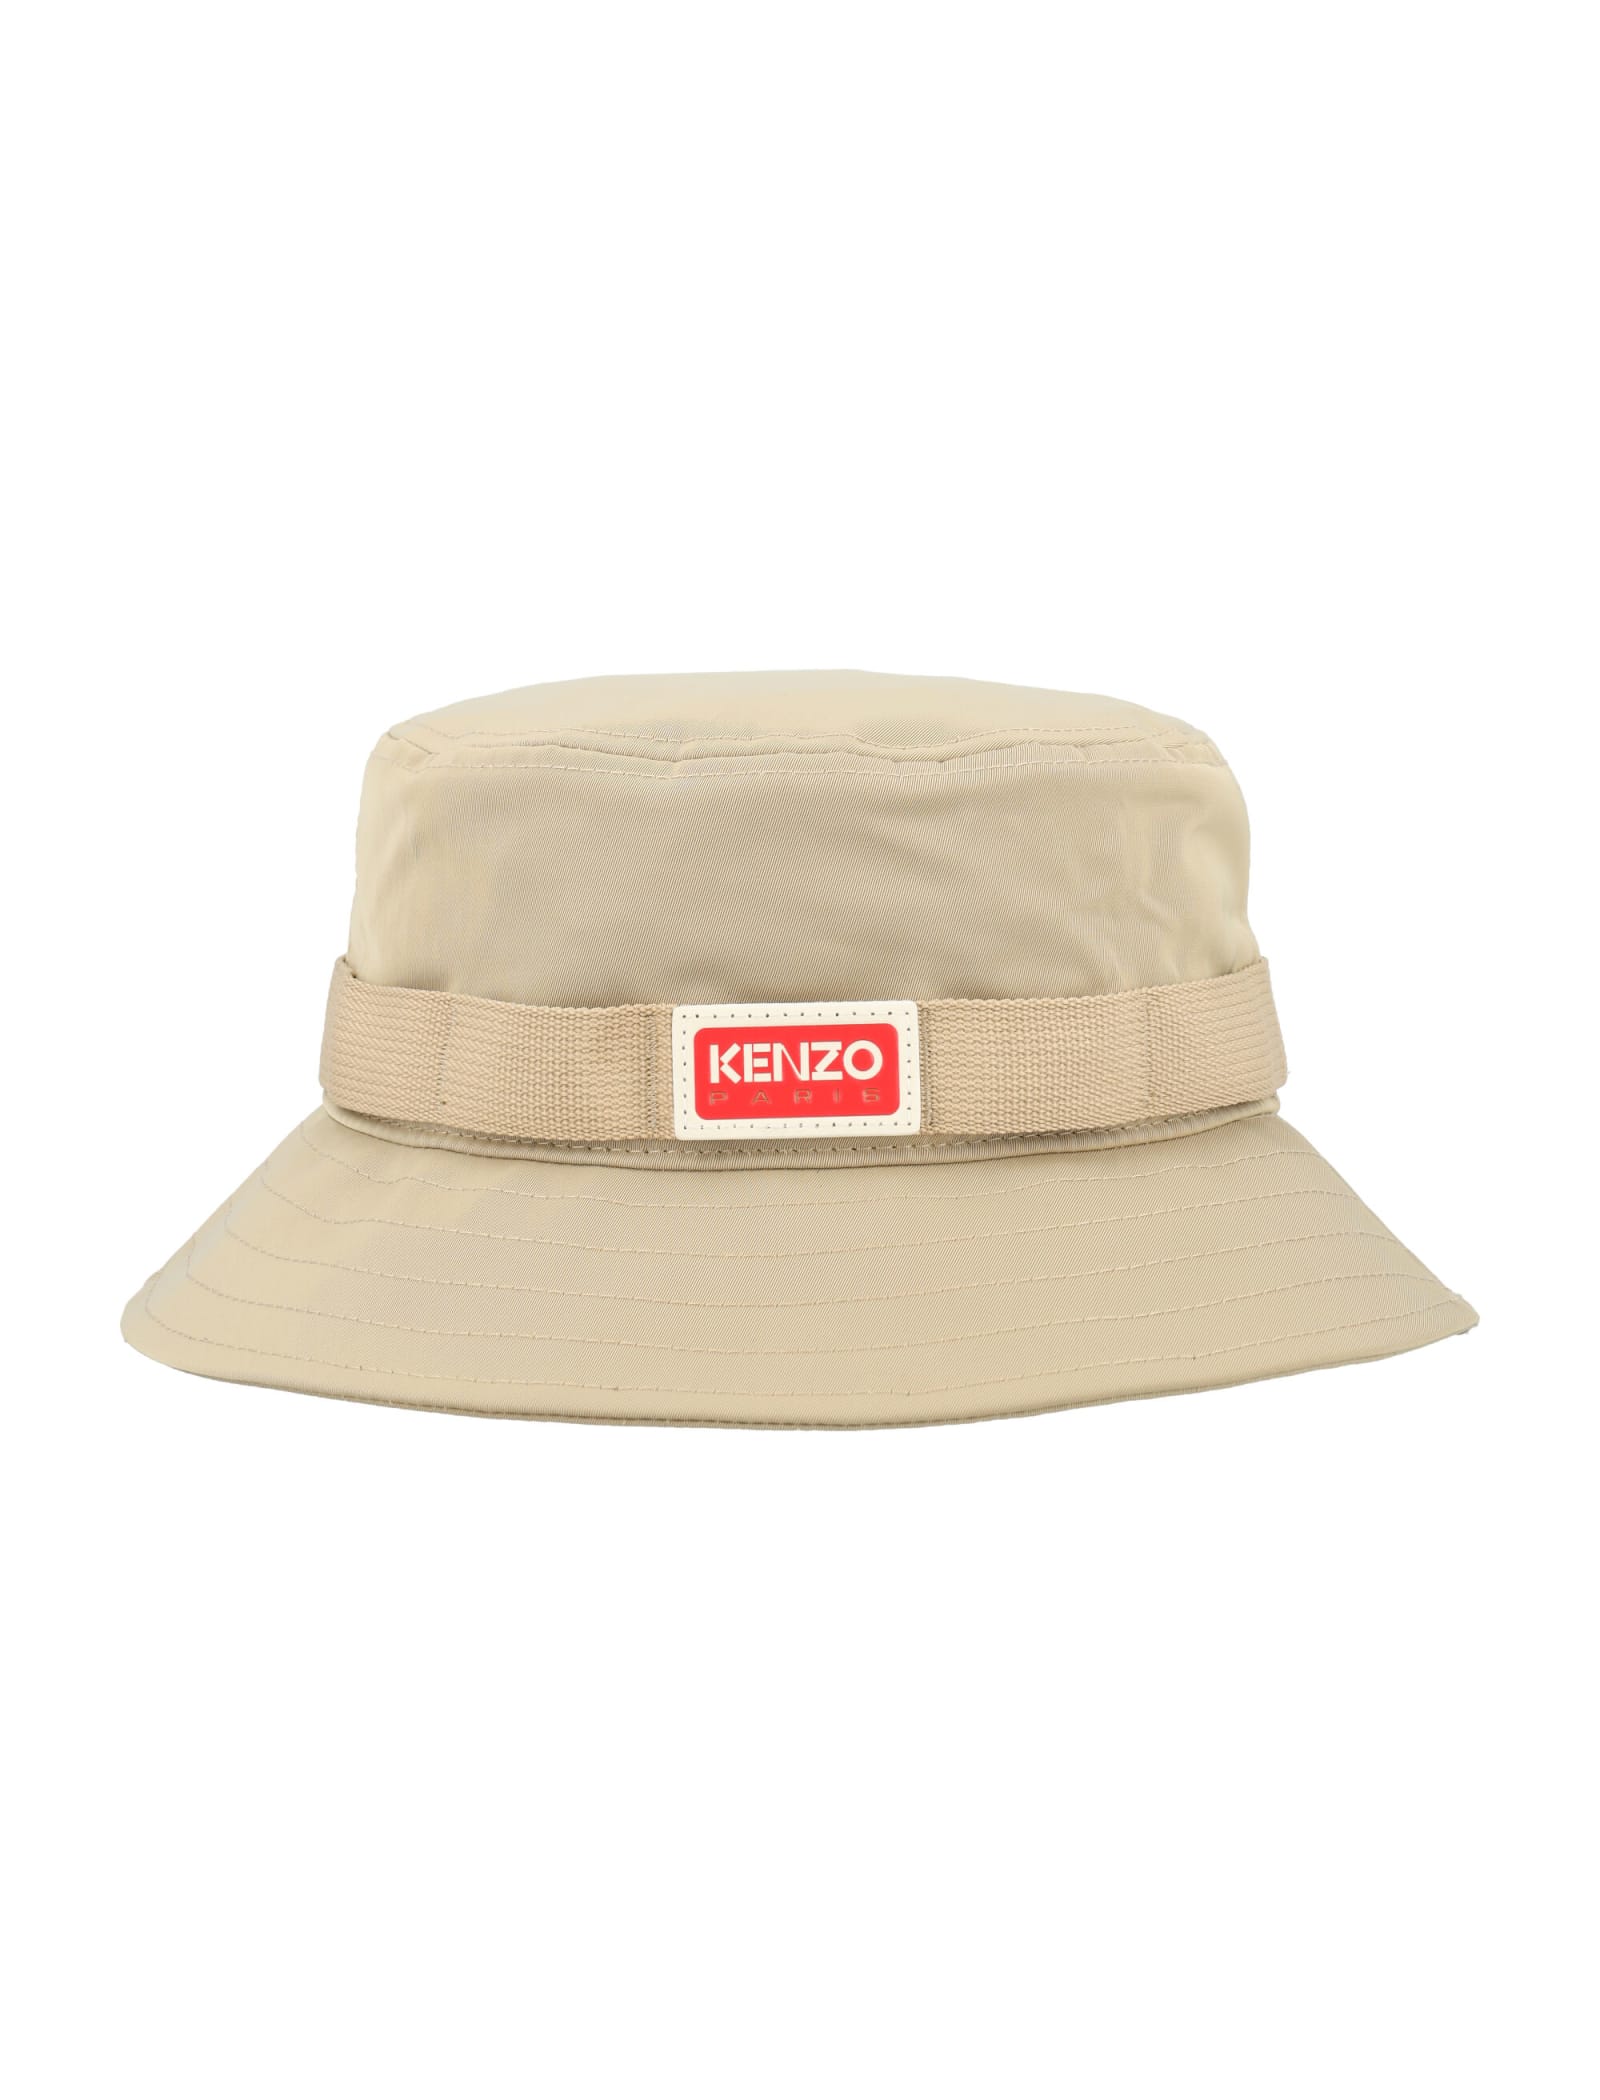 Kenzo Jungle Hat